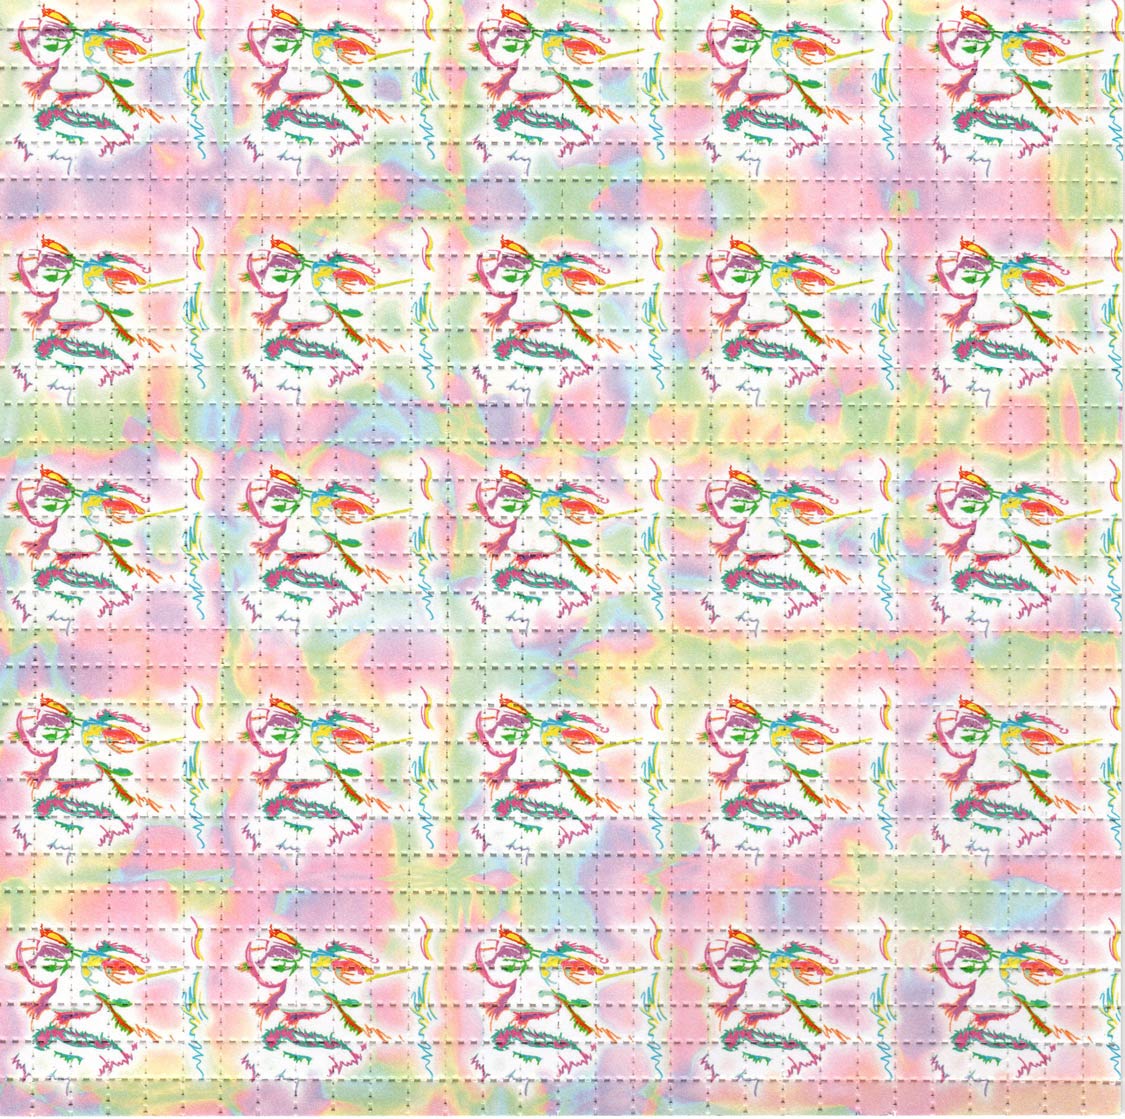 Jerry Faces LSD blotter art print